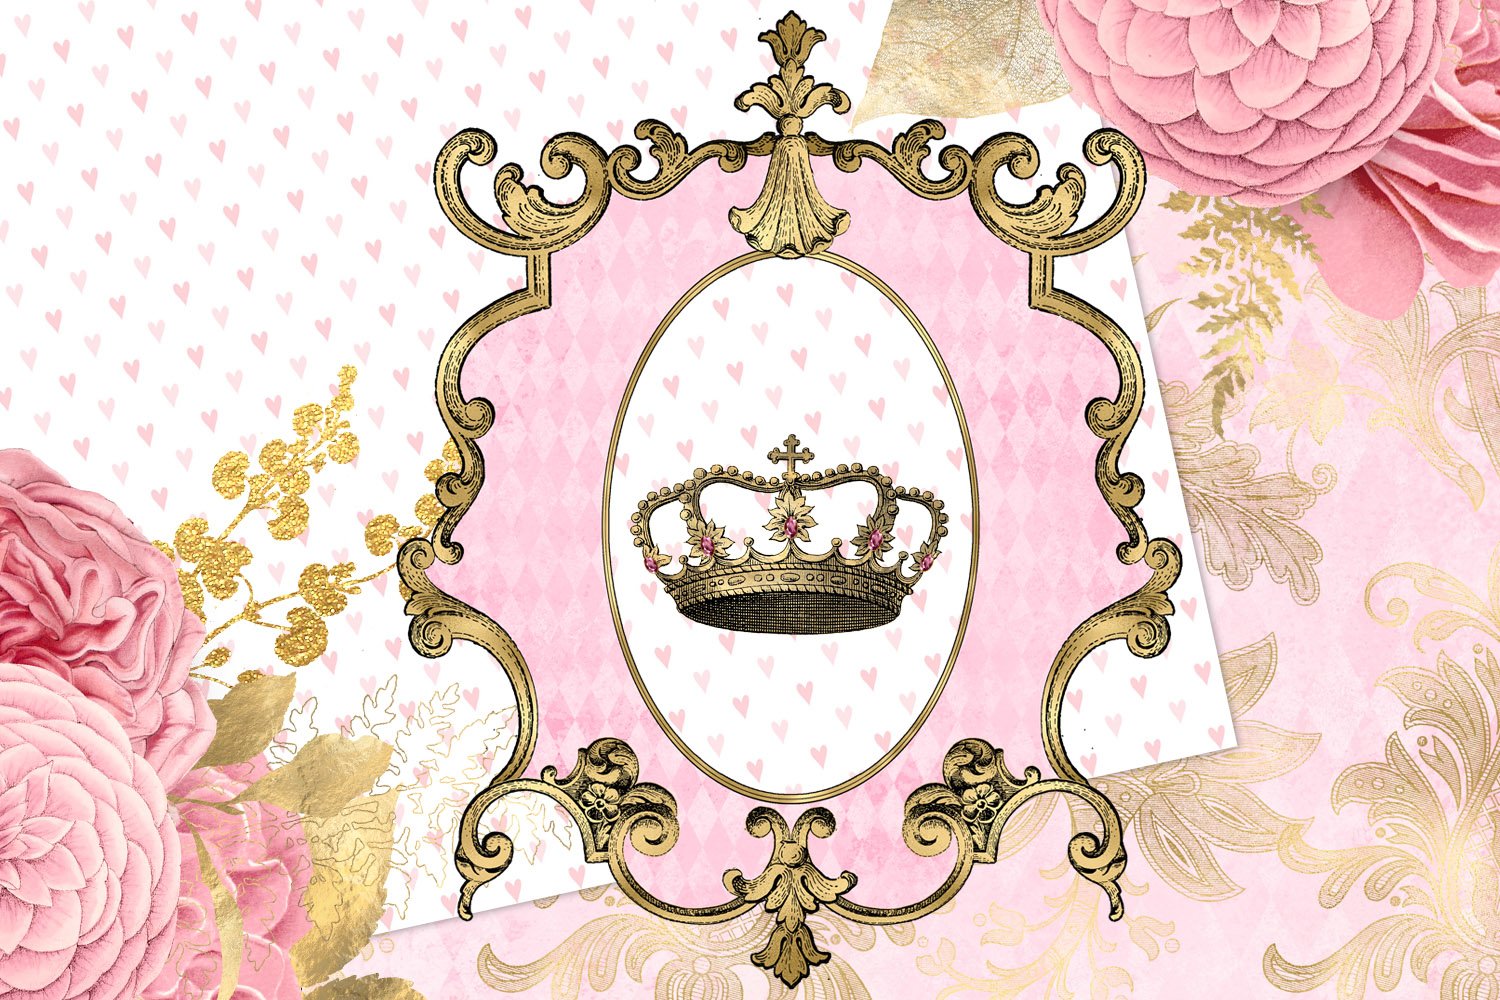 Crown in a golden frame.